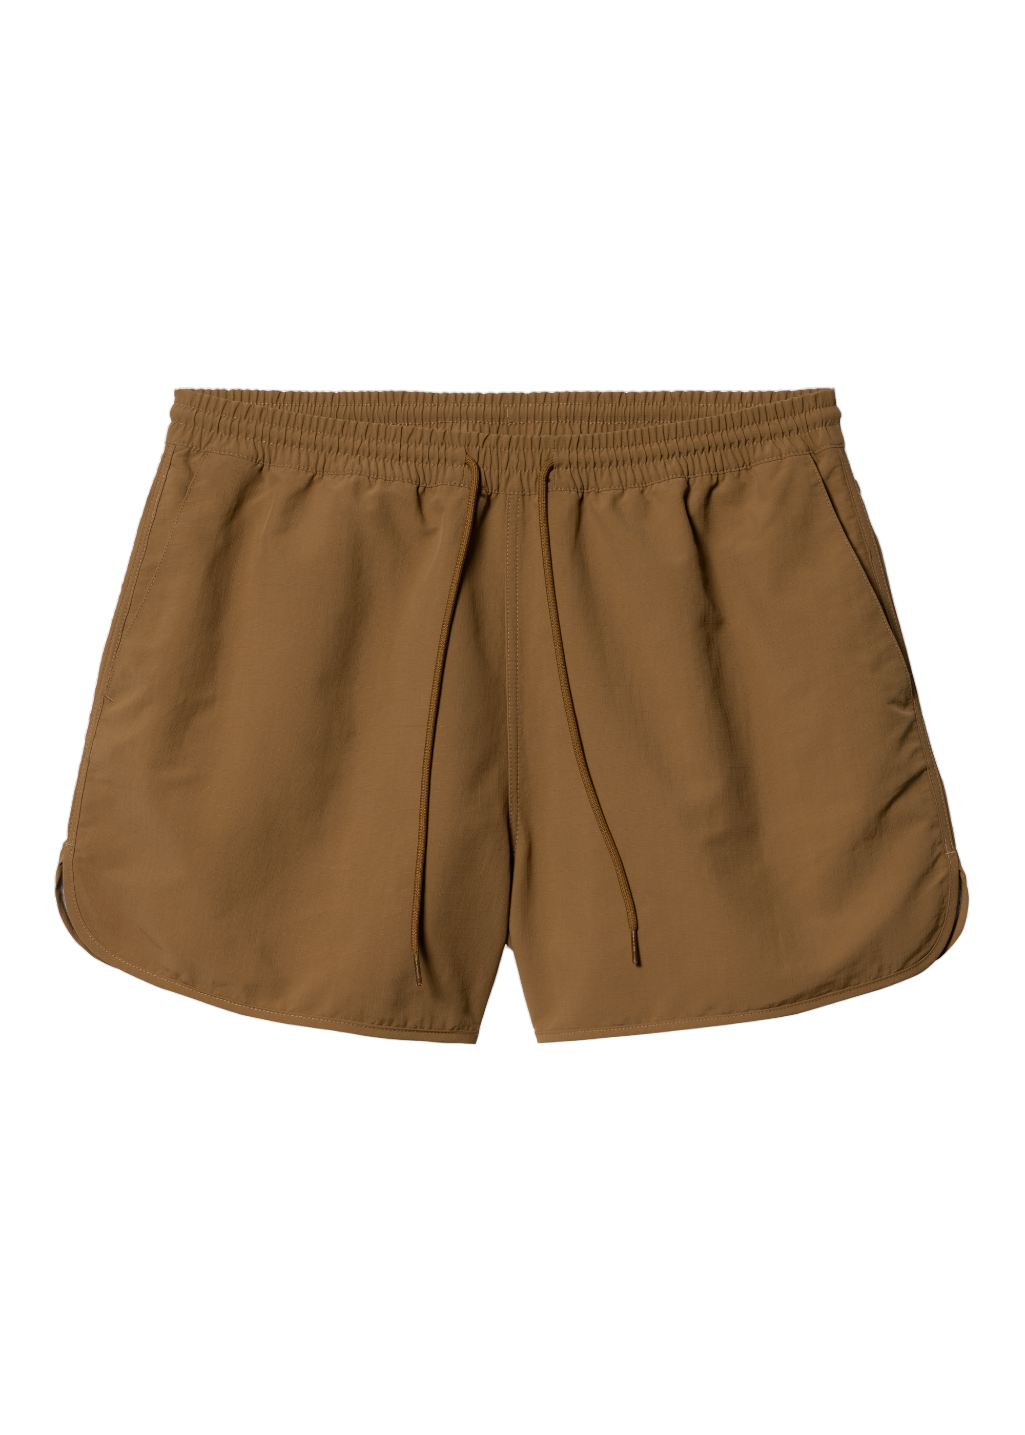 sportscene - Redbat Men's Stay True Print Shorts - R369